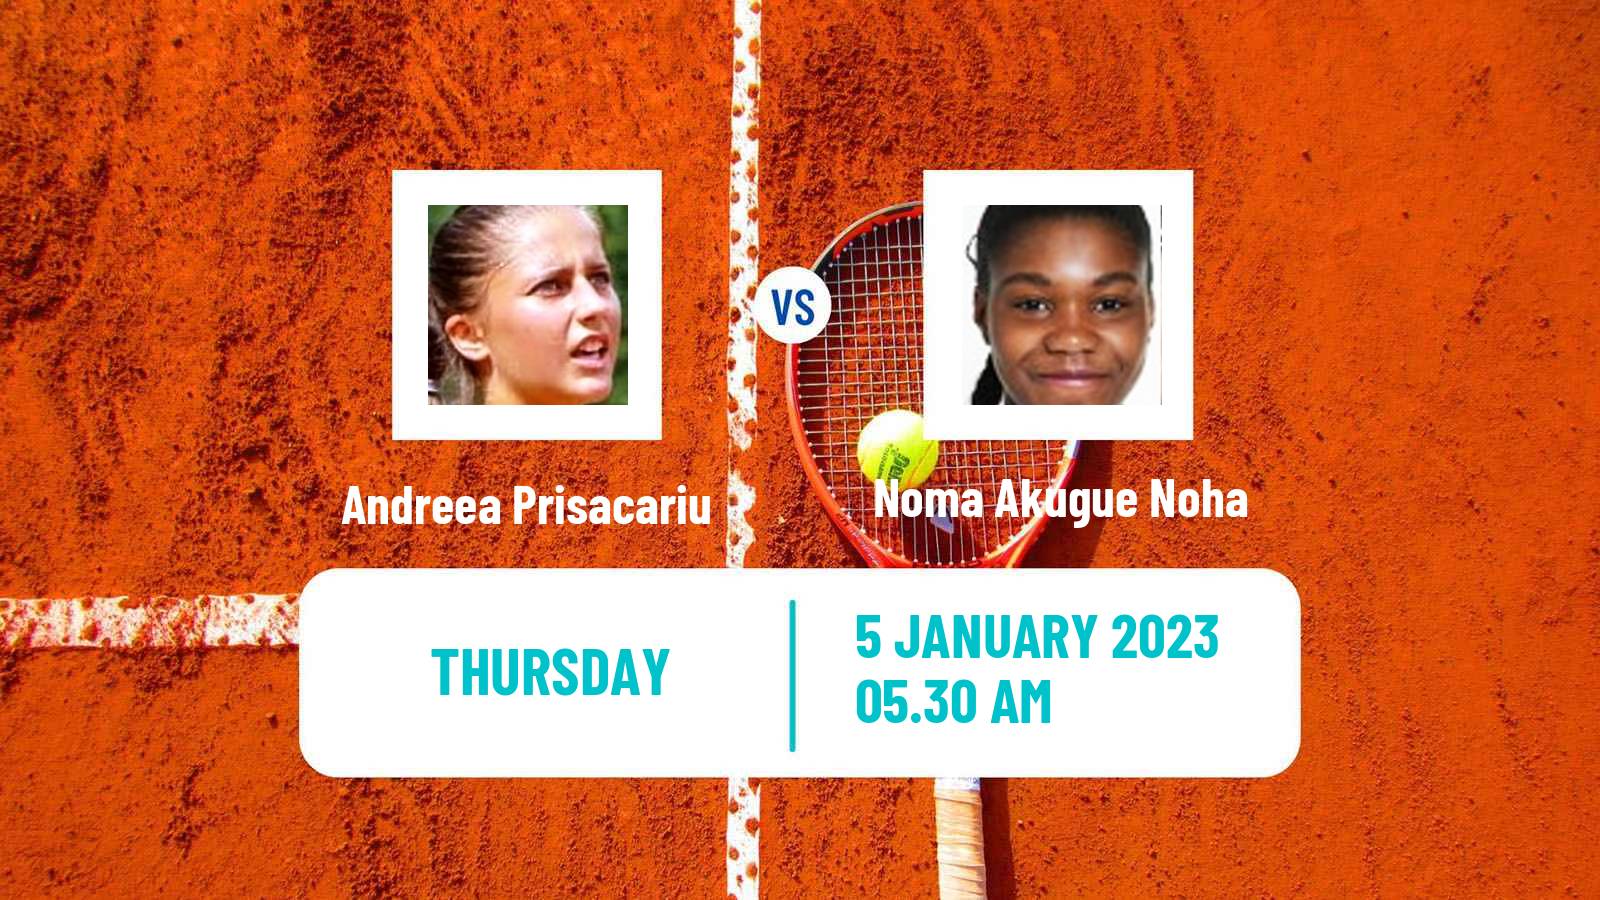 Tennis ITF Tournaments Andreea Prisacariu - Noma Akugue Noha